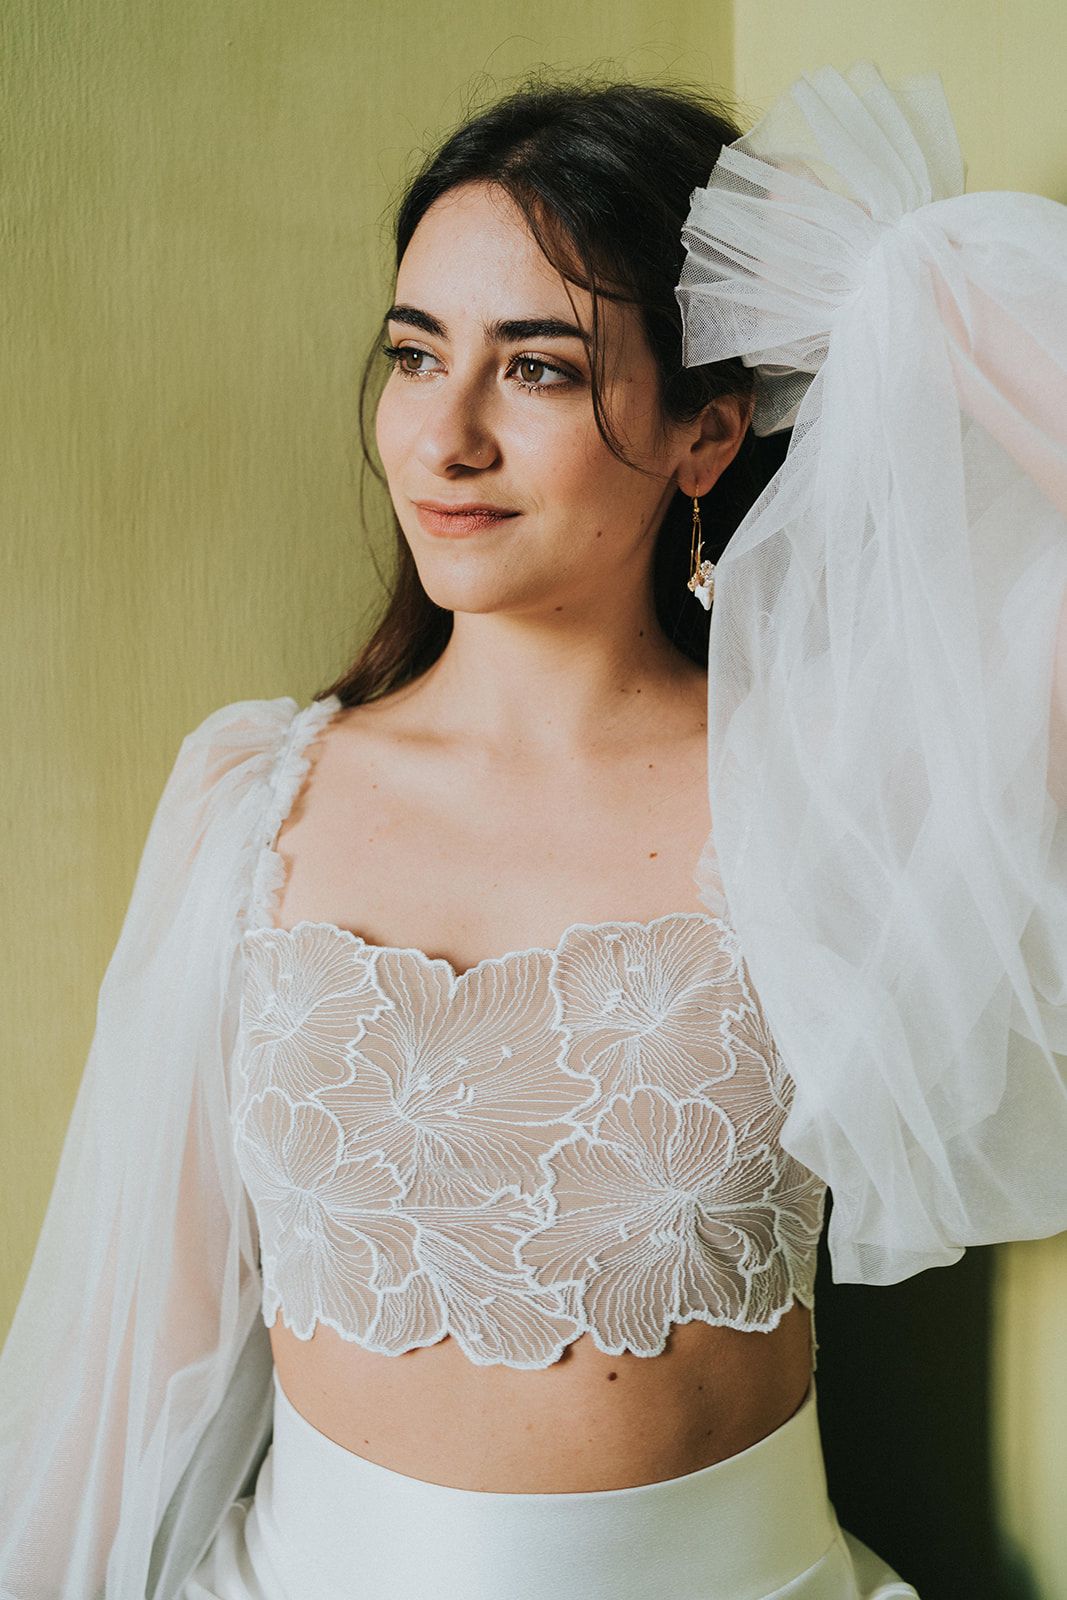 Tailor-made wedding dress - Délice